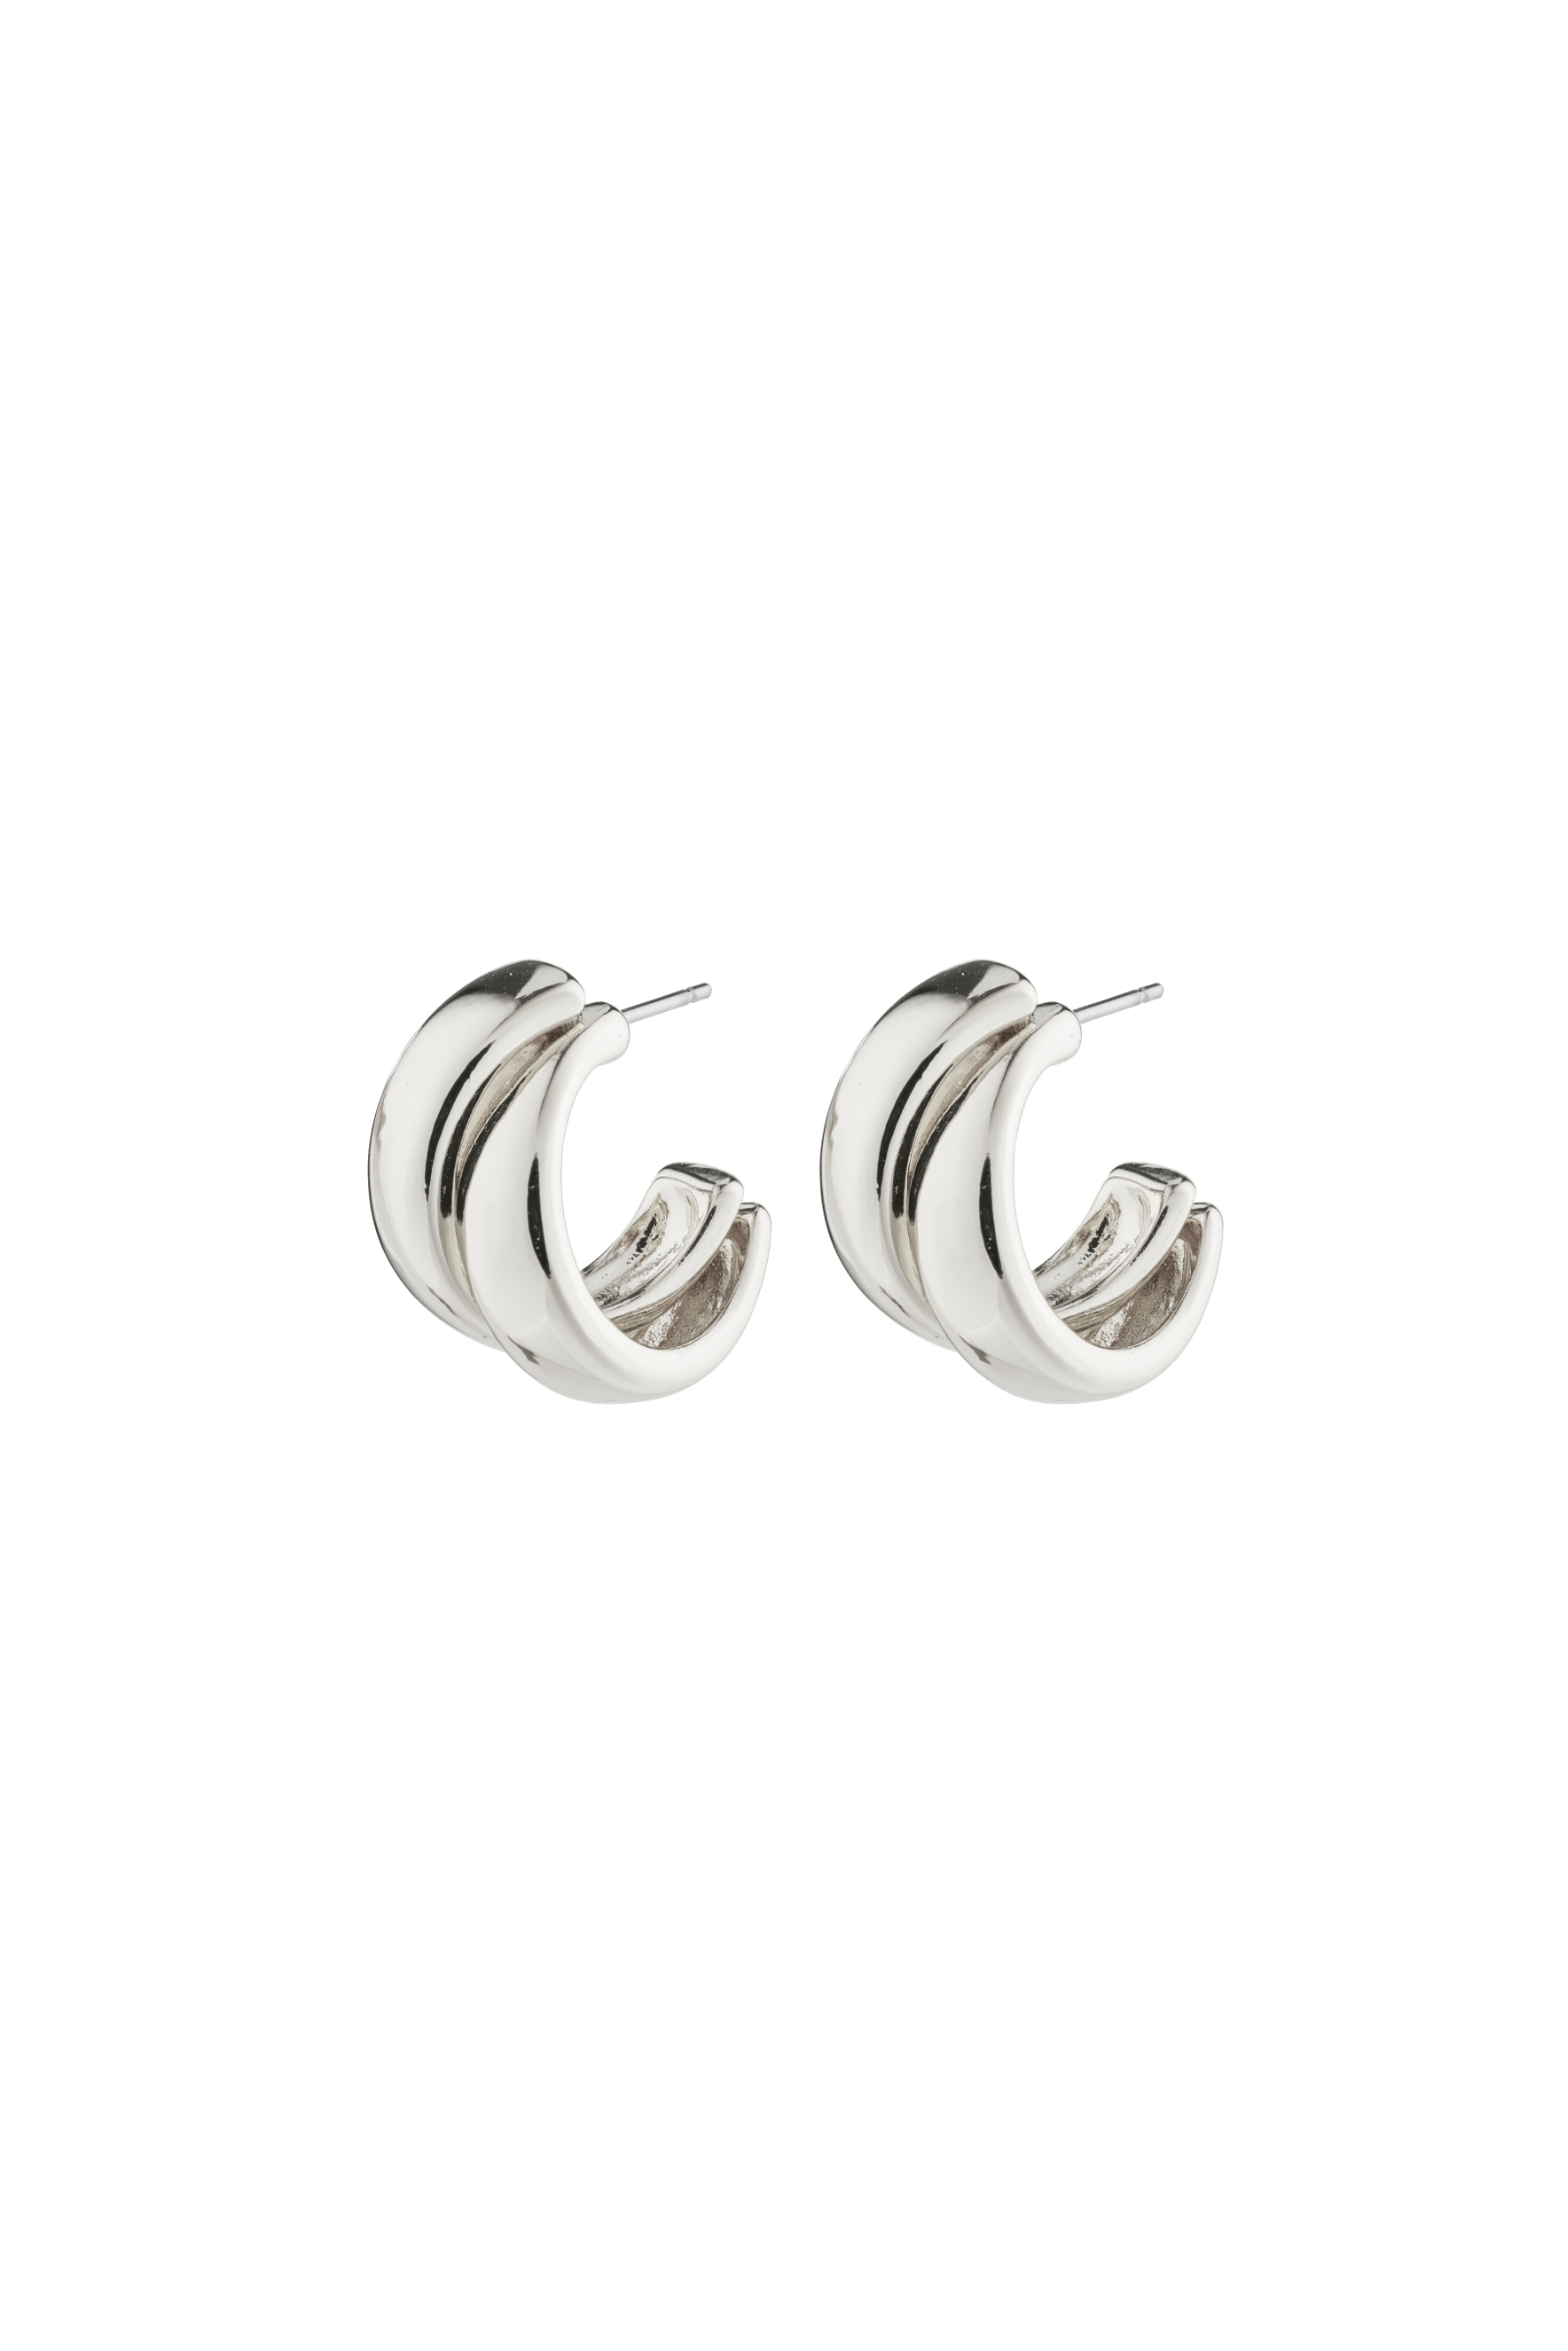 Orit Recycled Earrings - Silver